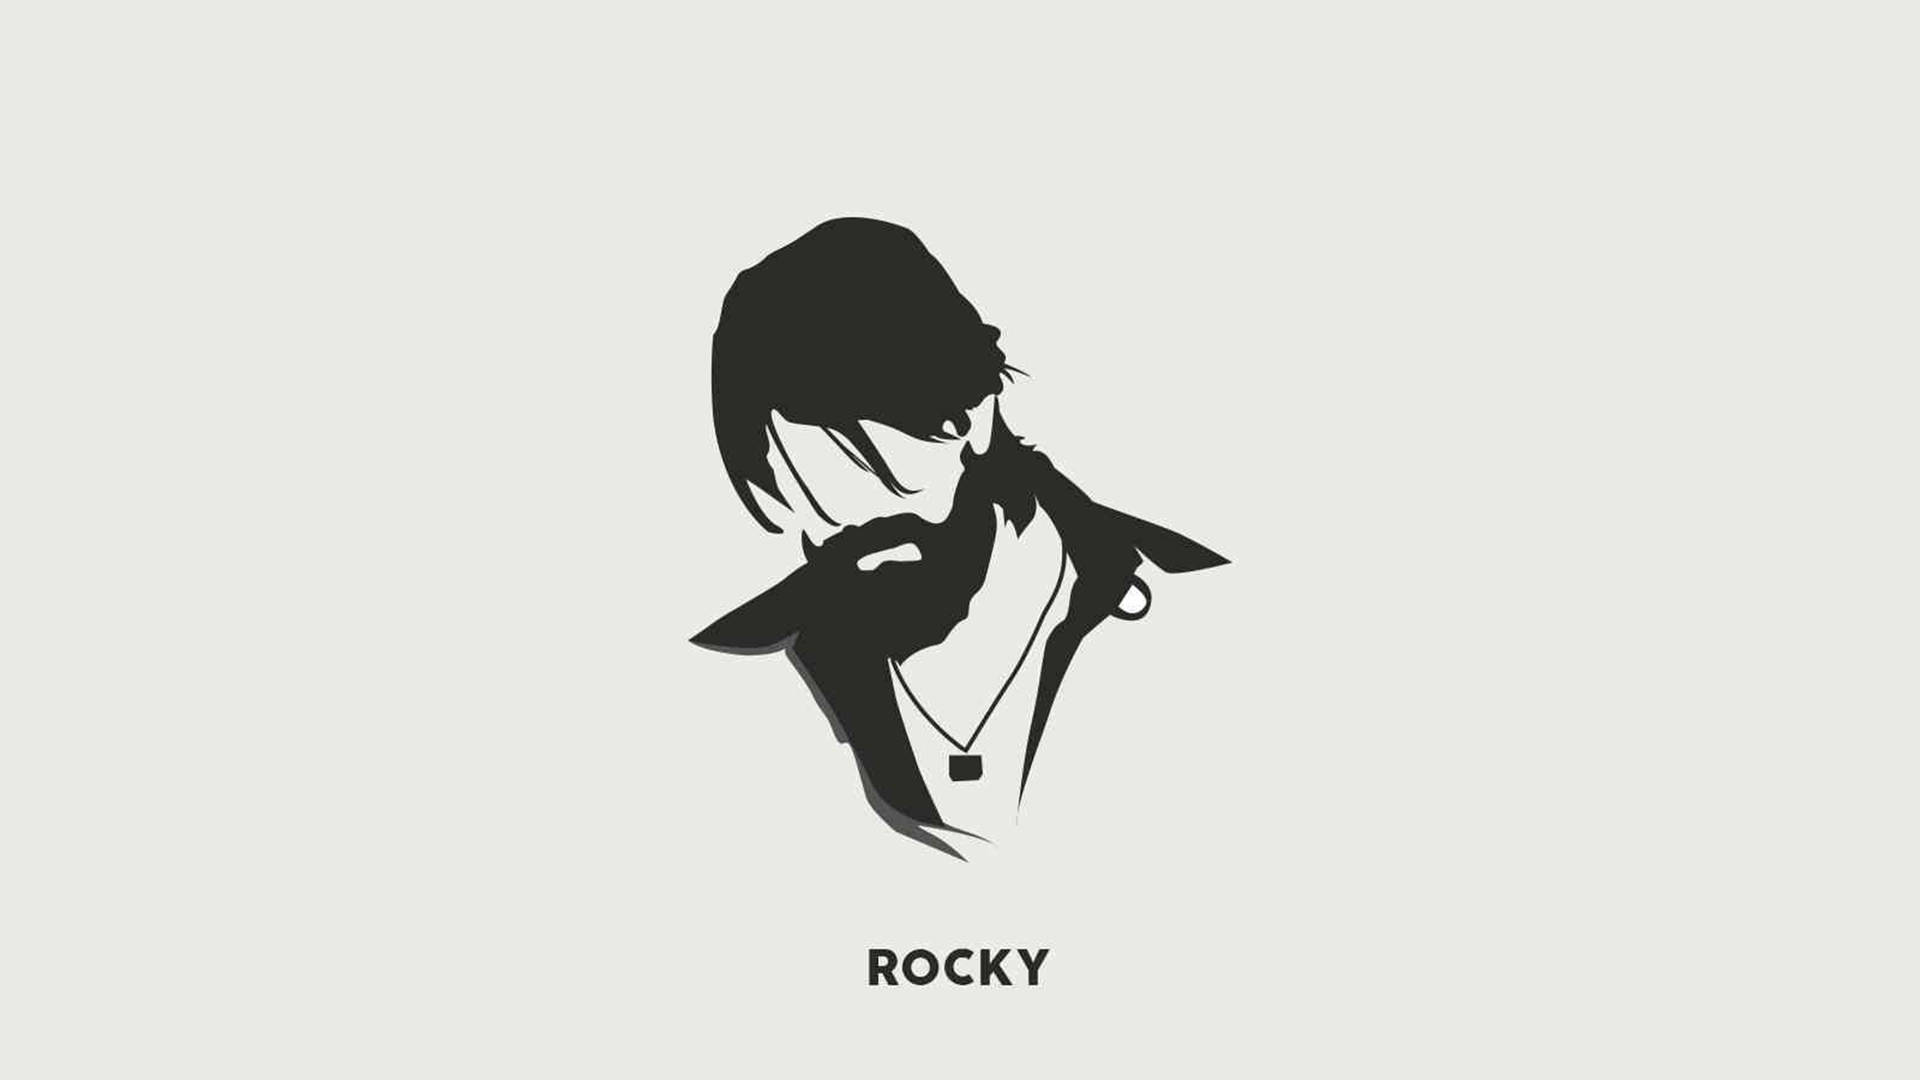 Kgf 4k Rocky Face Silhouette Wallpaper